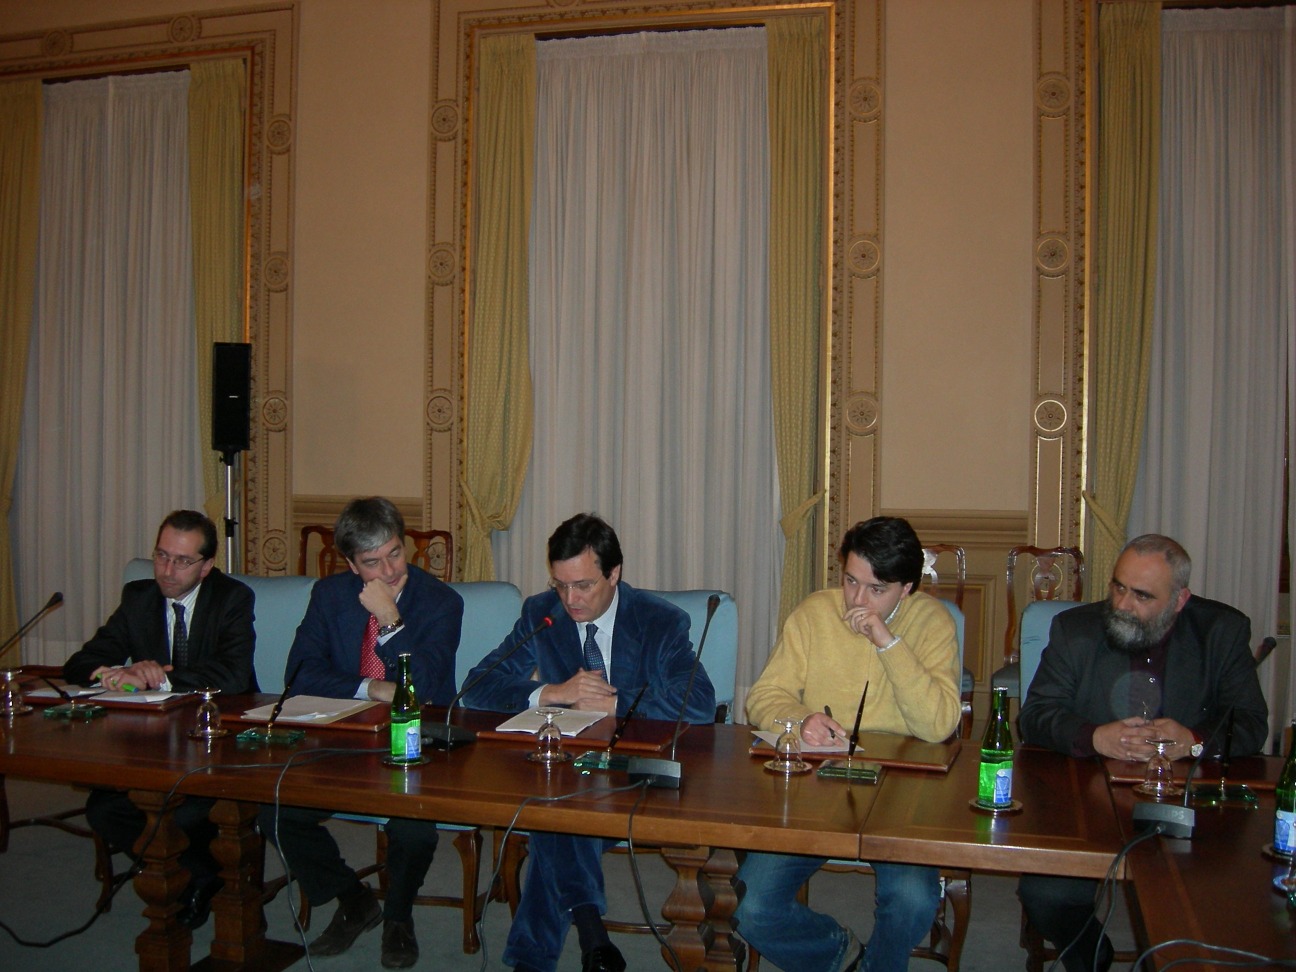 Da sinistra: Gelli, Domenici, Martini, Renzi, Lepri